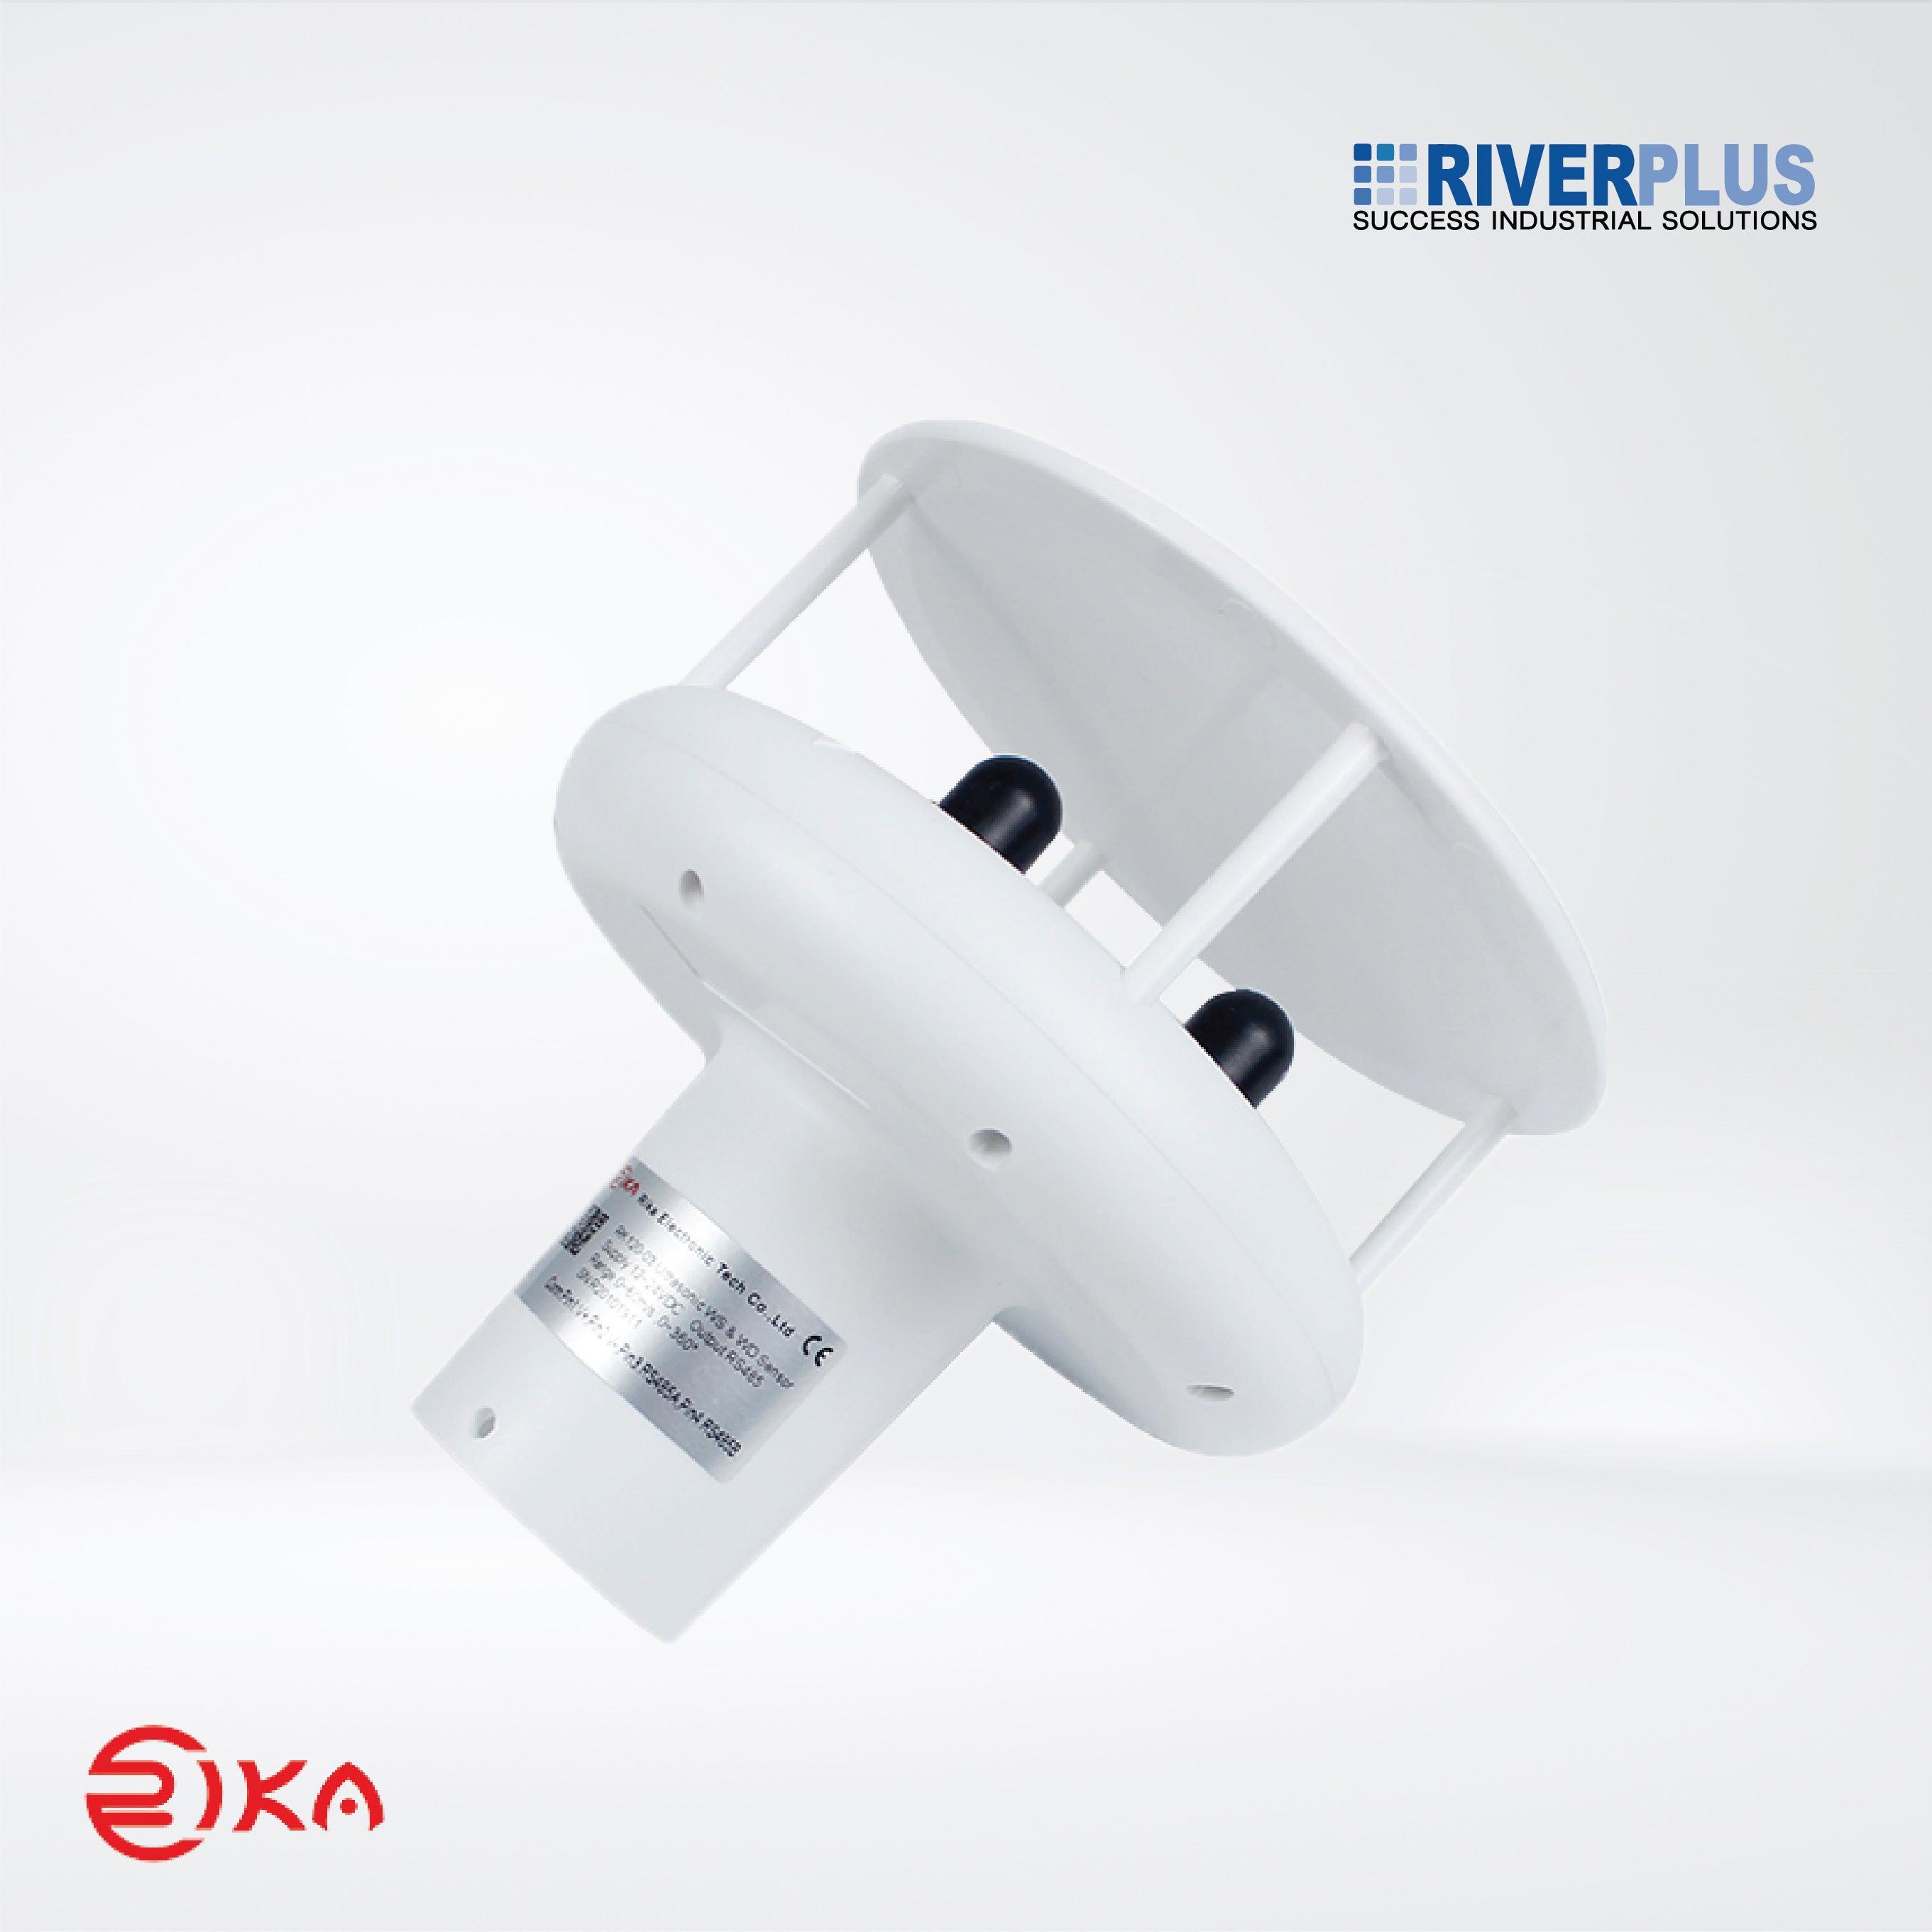 RK120-03 Ultrasonic Wind Speed And Direction Sensor - Riverplus